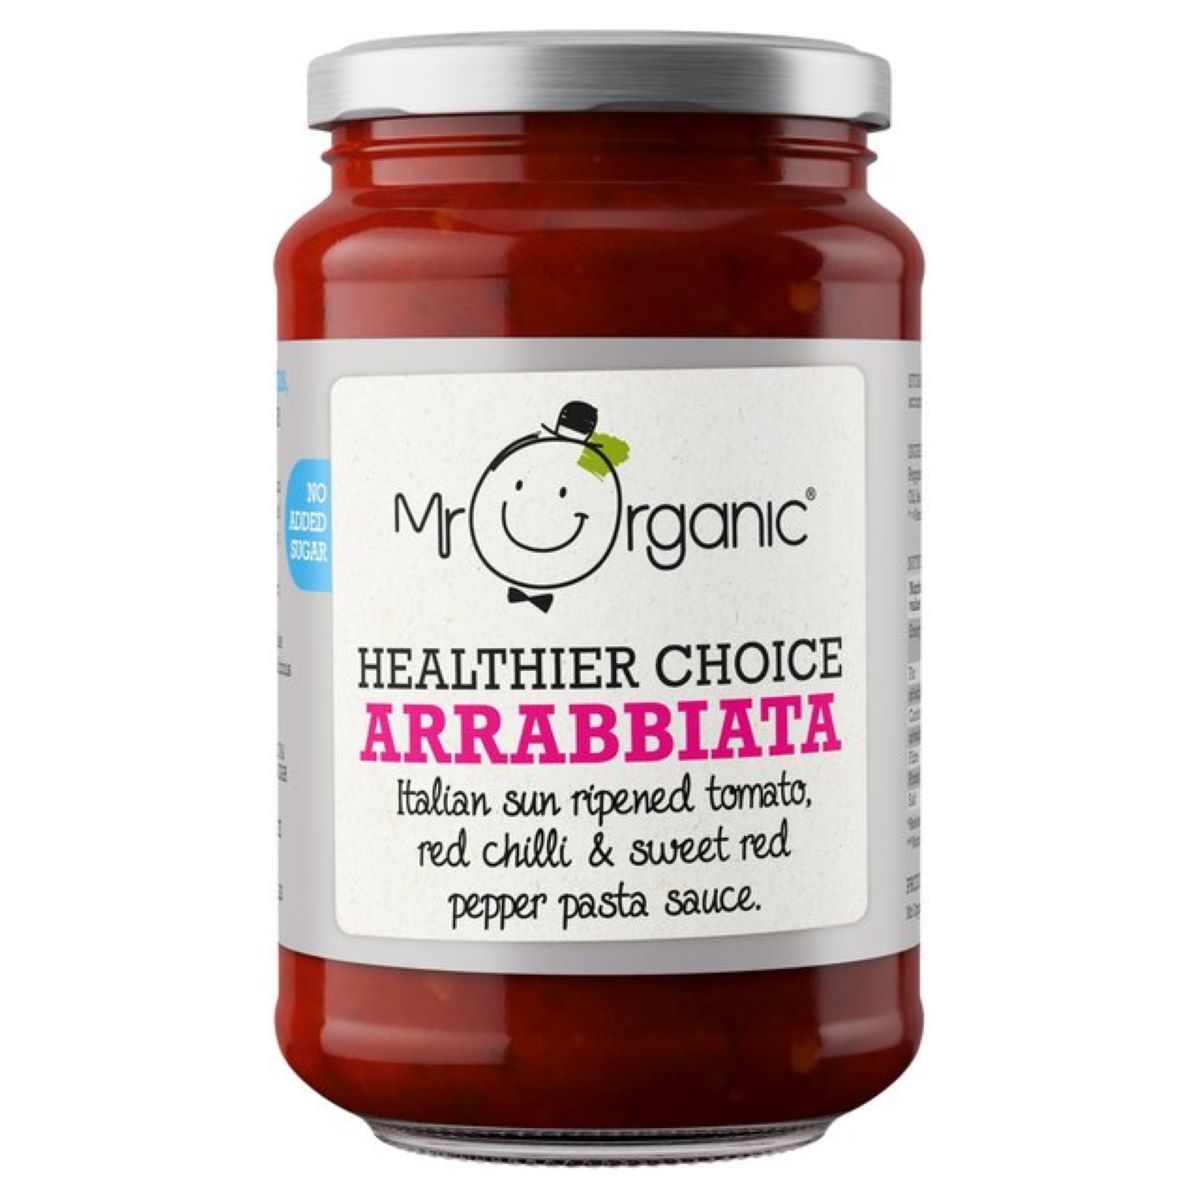 Mr Organic Arrabbiata Healthier Choice Pasta Sauce 350g